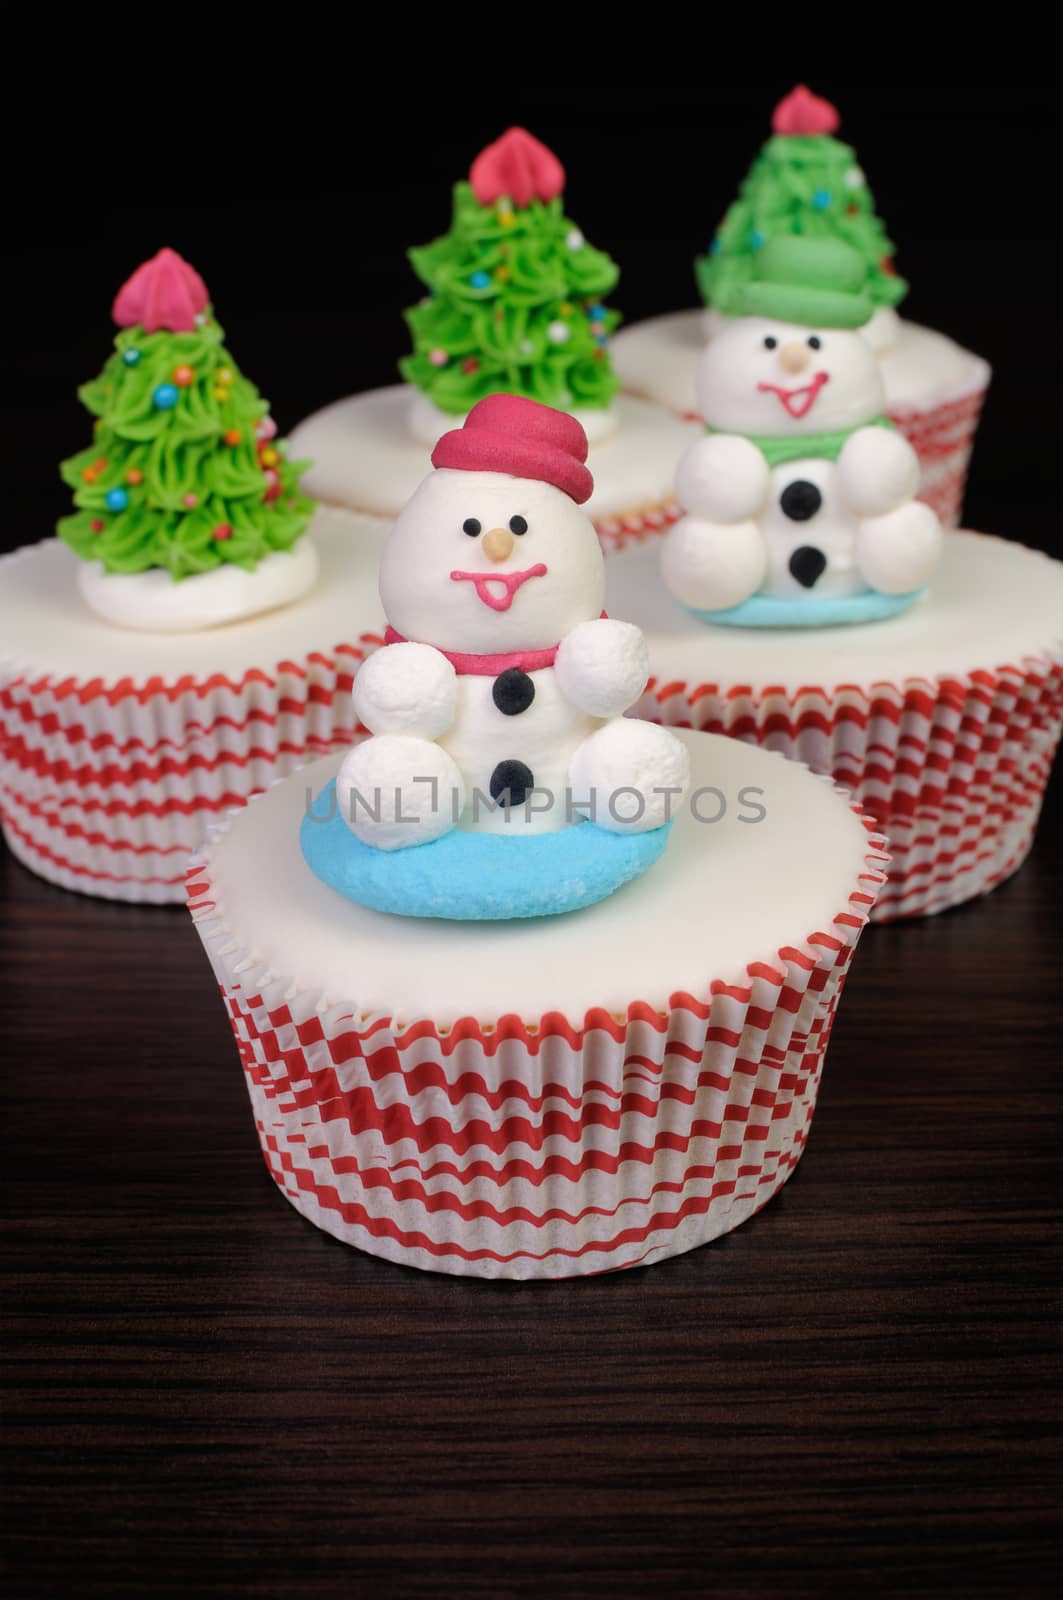 Sugar snowmen figurines on glazed muffins by Apolonia